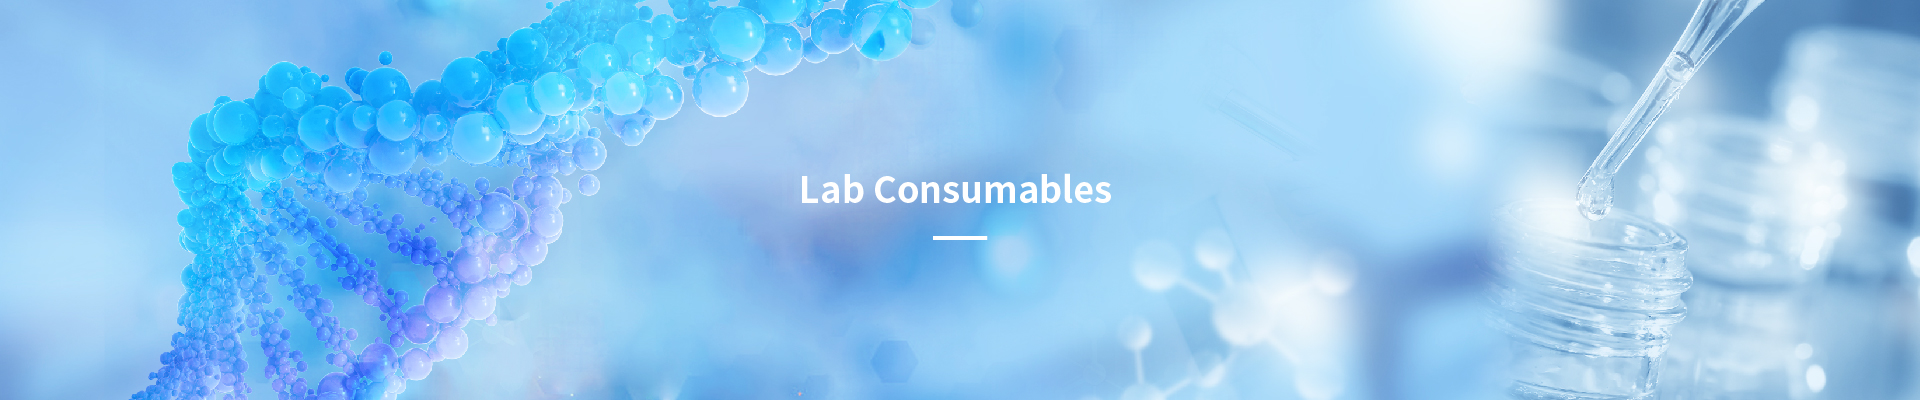 Consumibles de laboratorio
